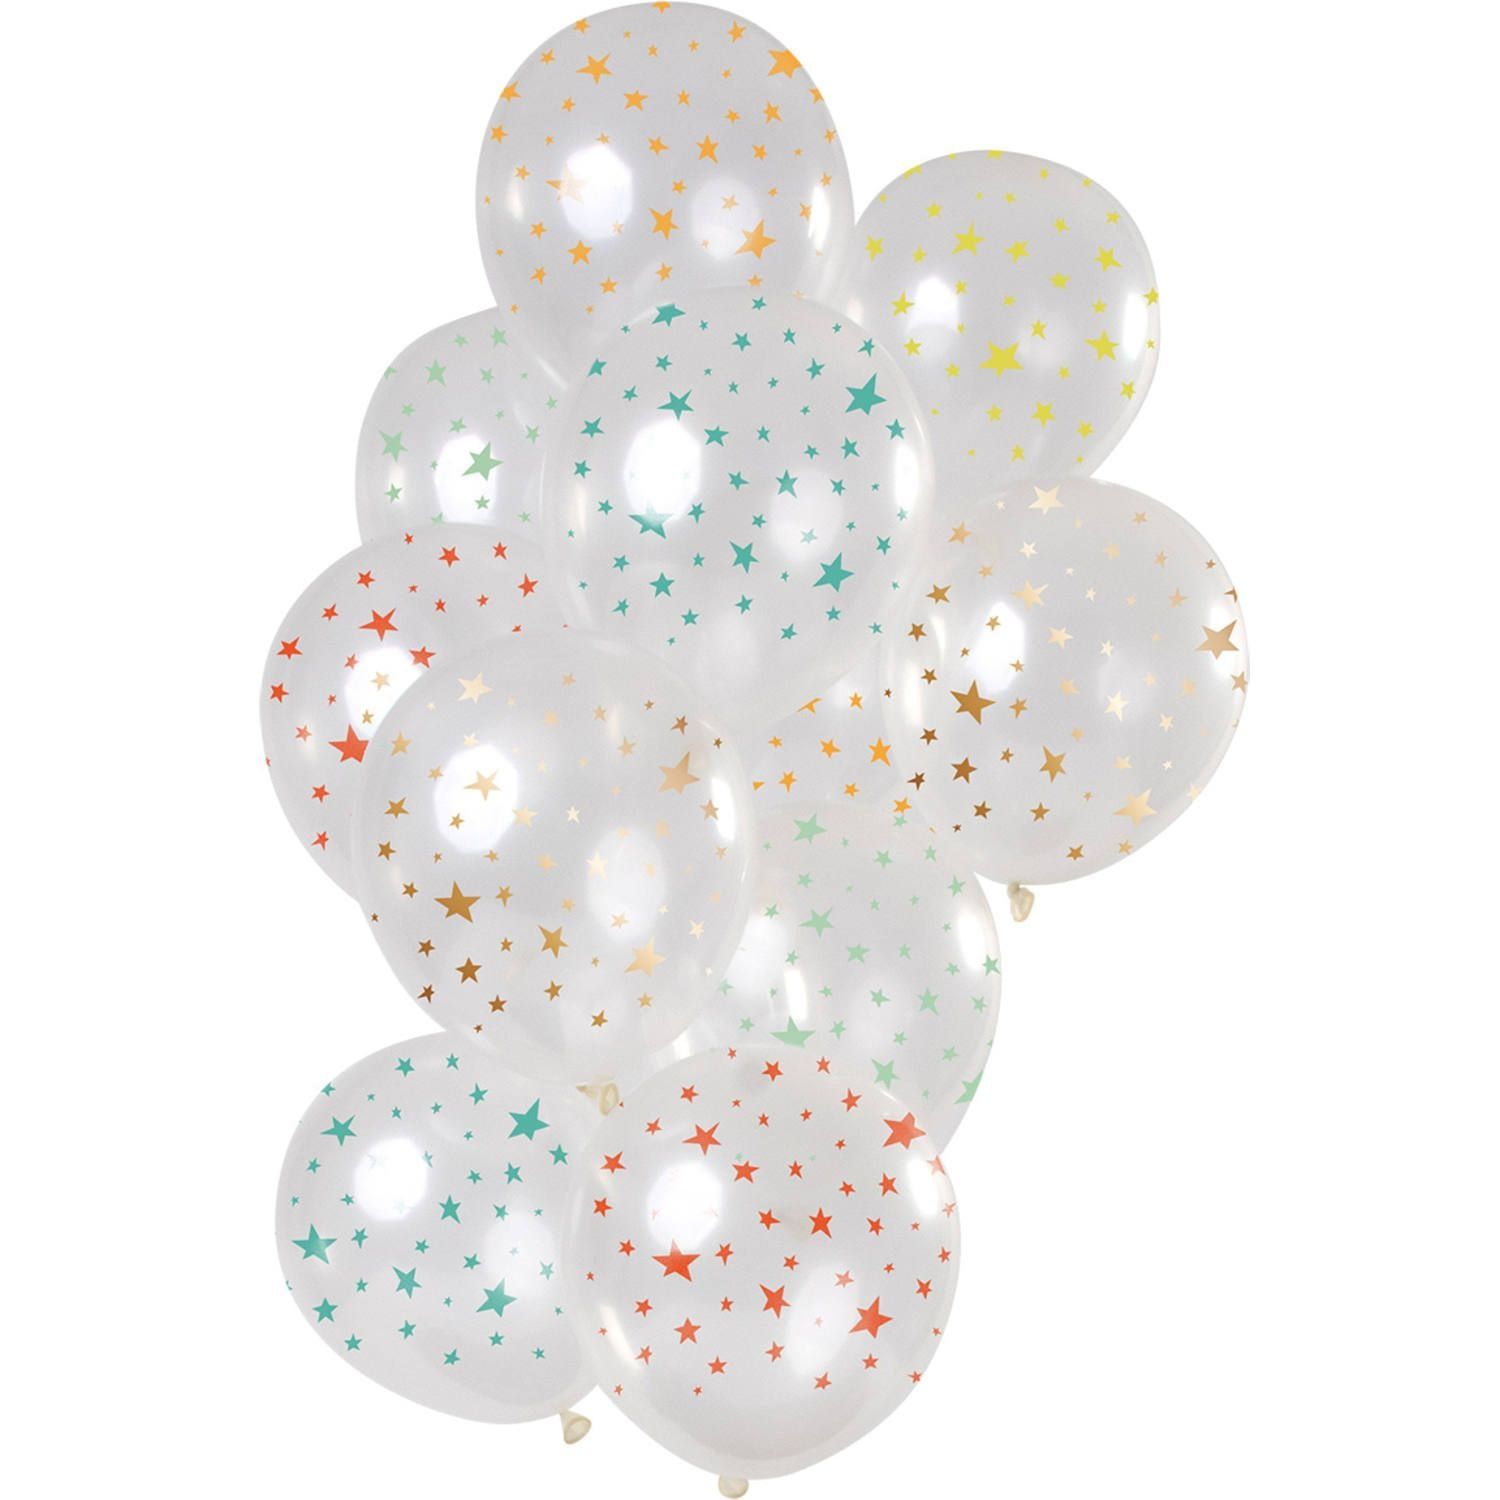 Sterren meerkleurig transparant ballonnen 12 stuks